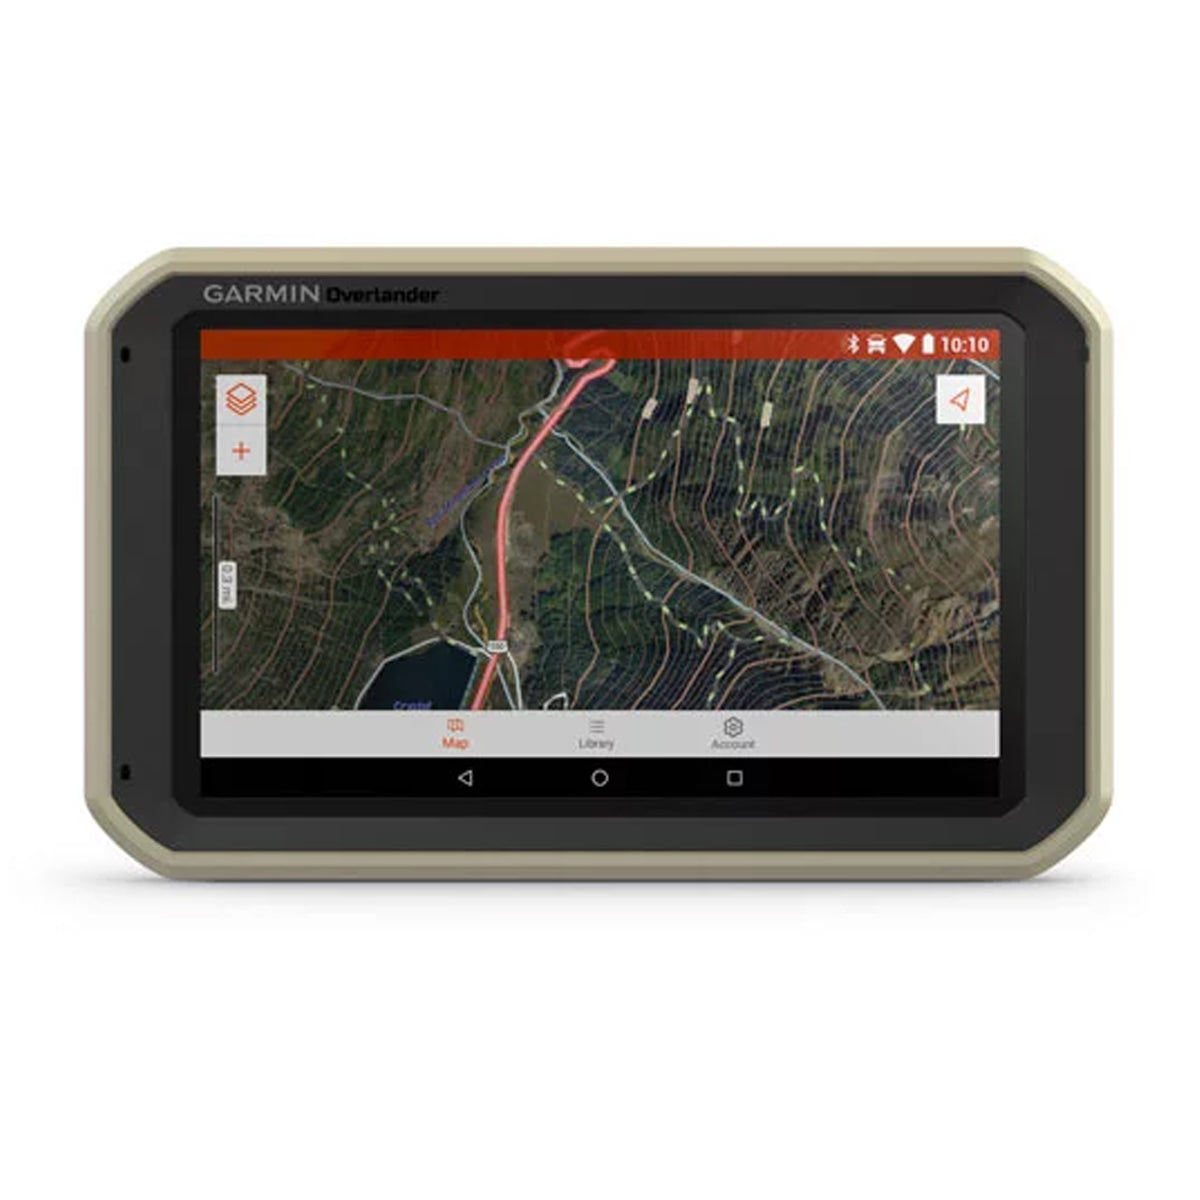 Garmin Overlander GPS by Garmin | Gear - goHUNT Shop